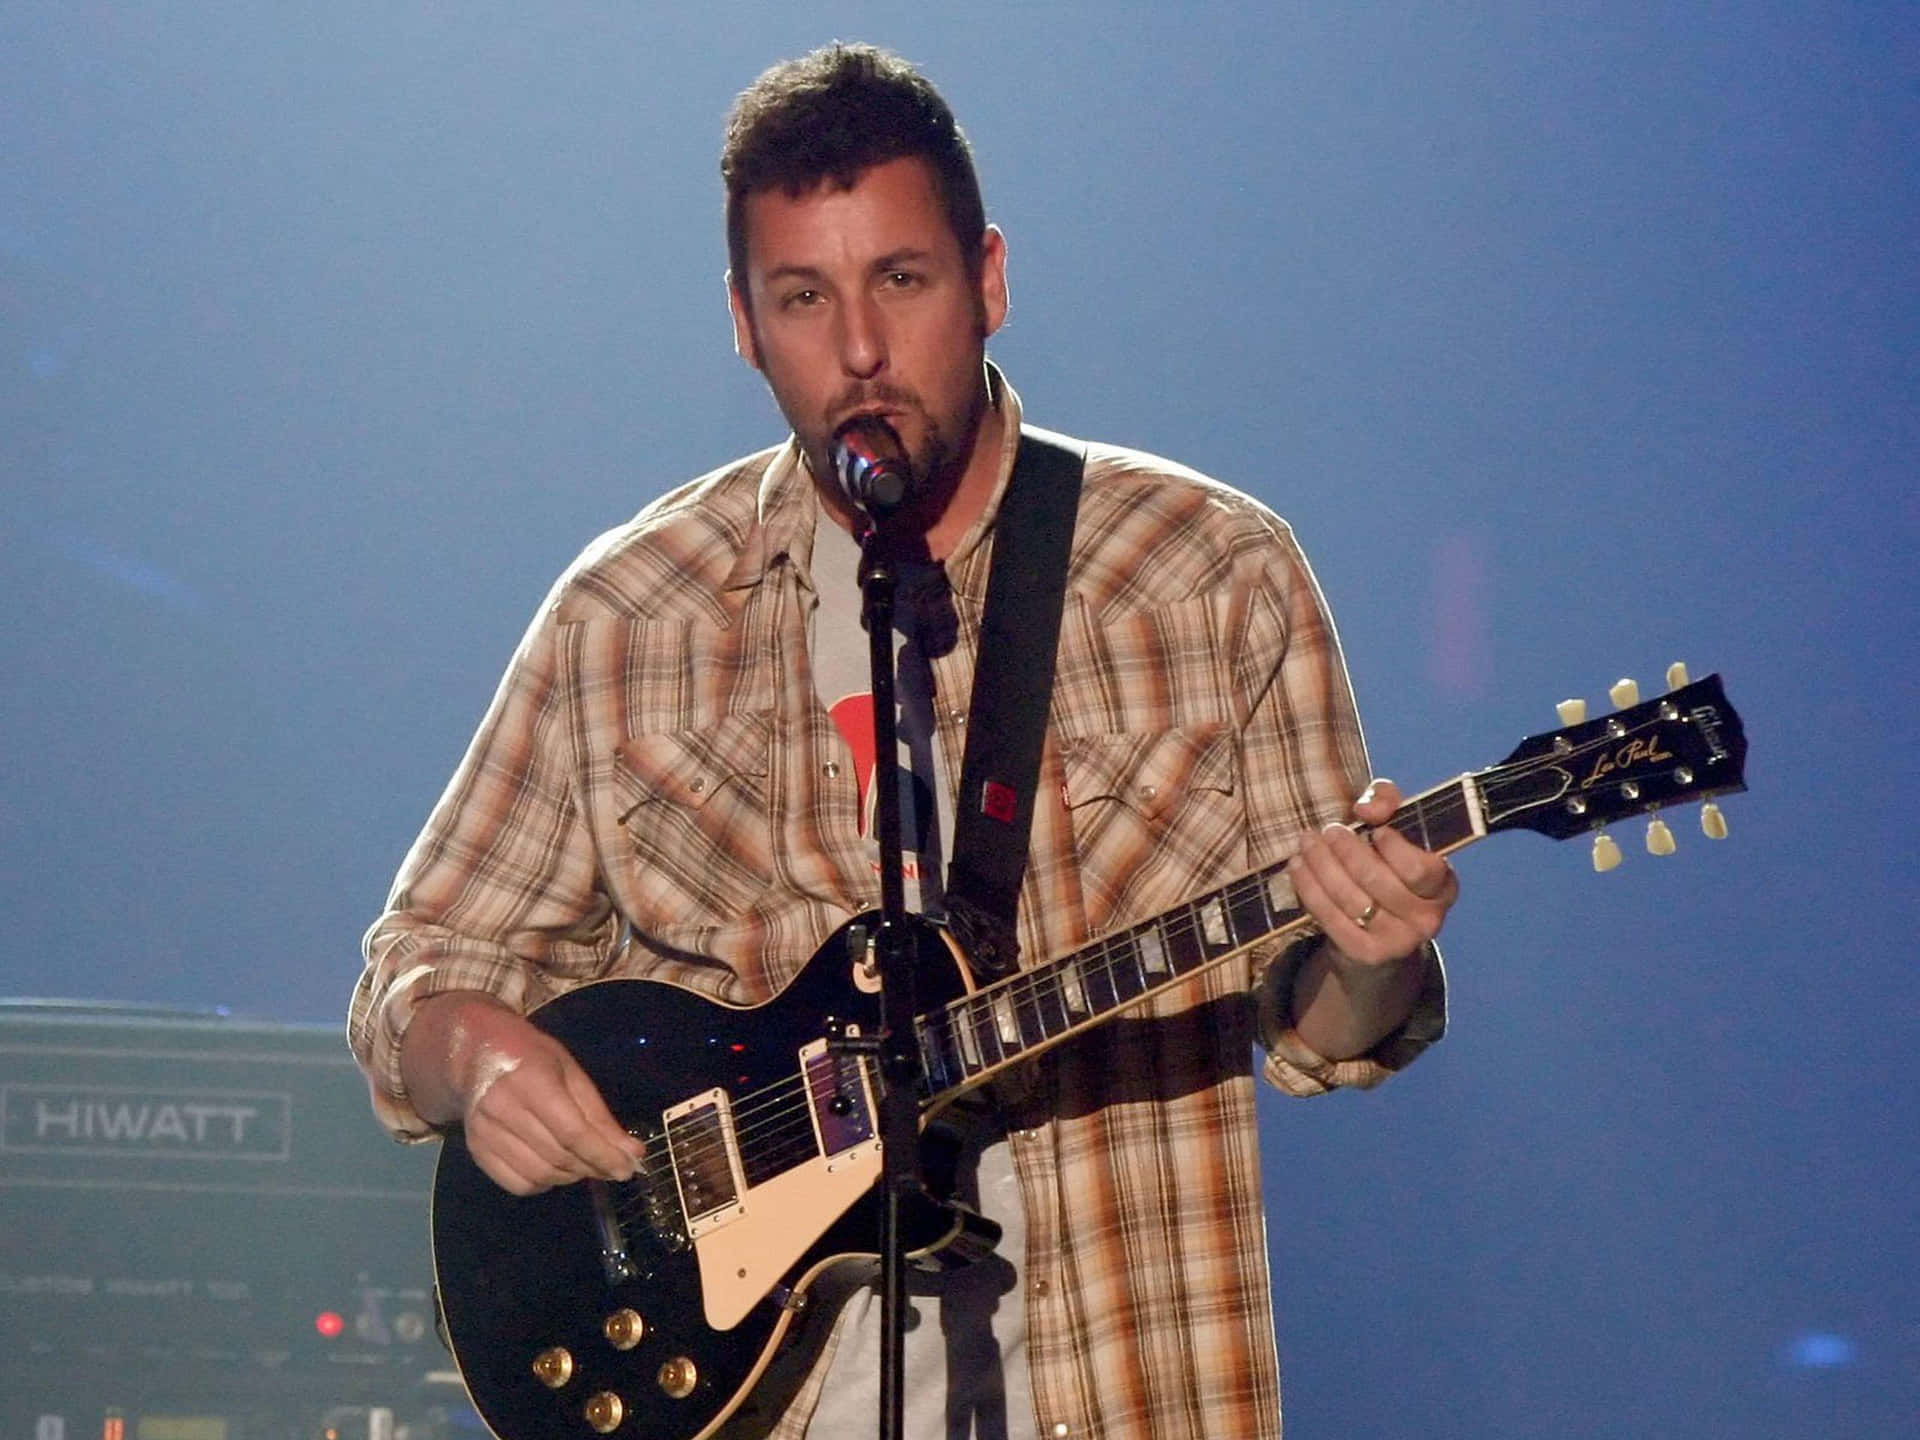 A Man In A Plaid Shirt Playing A Guitar